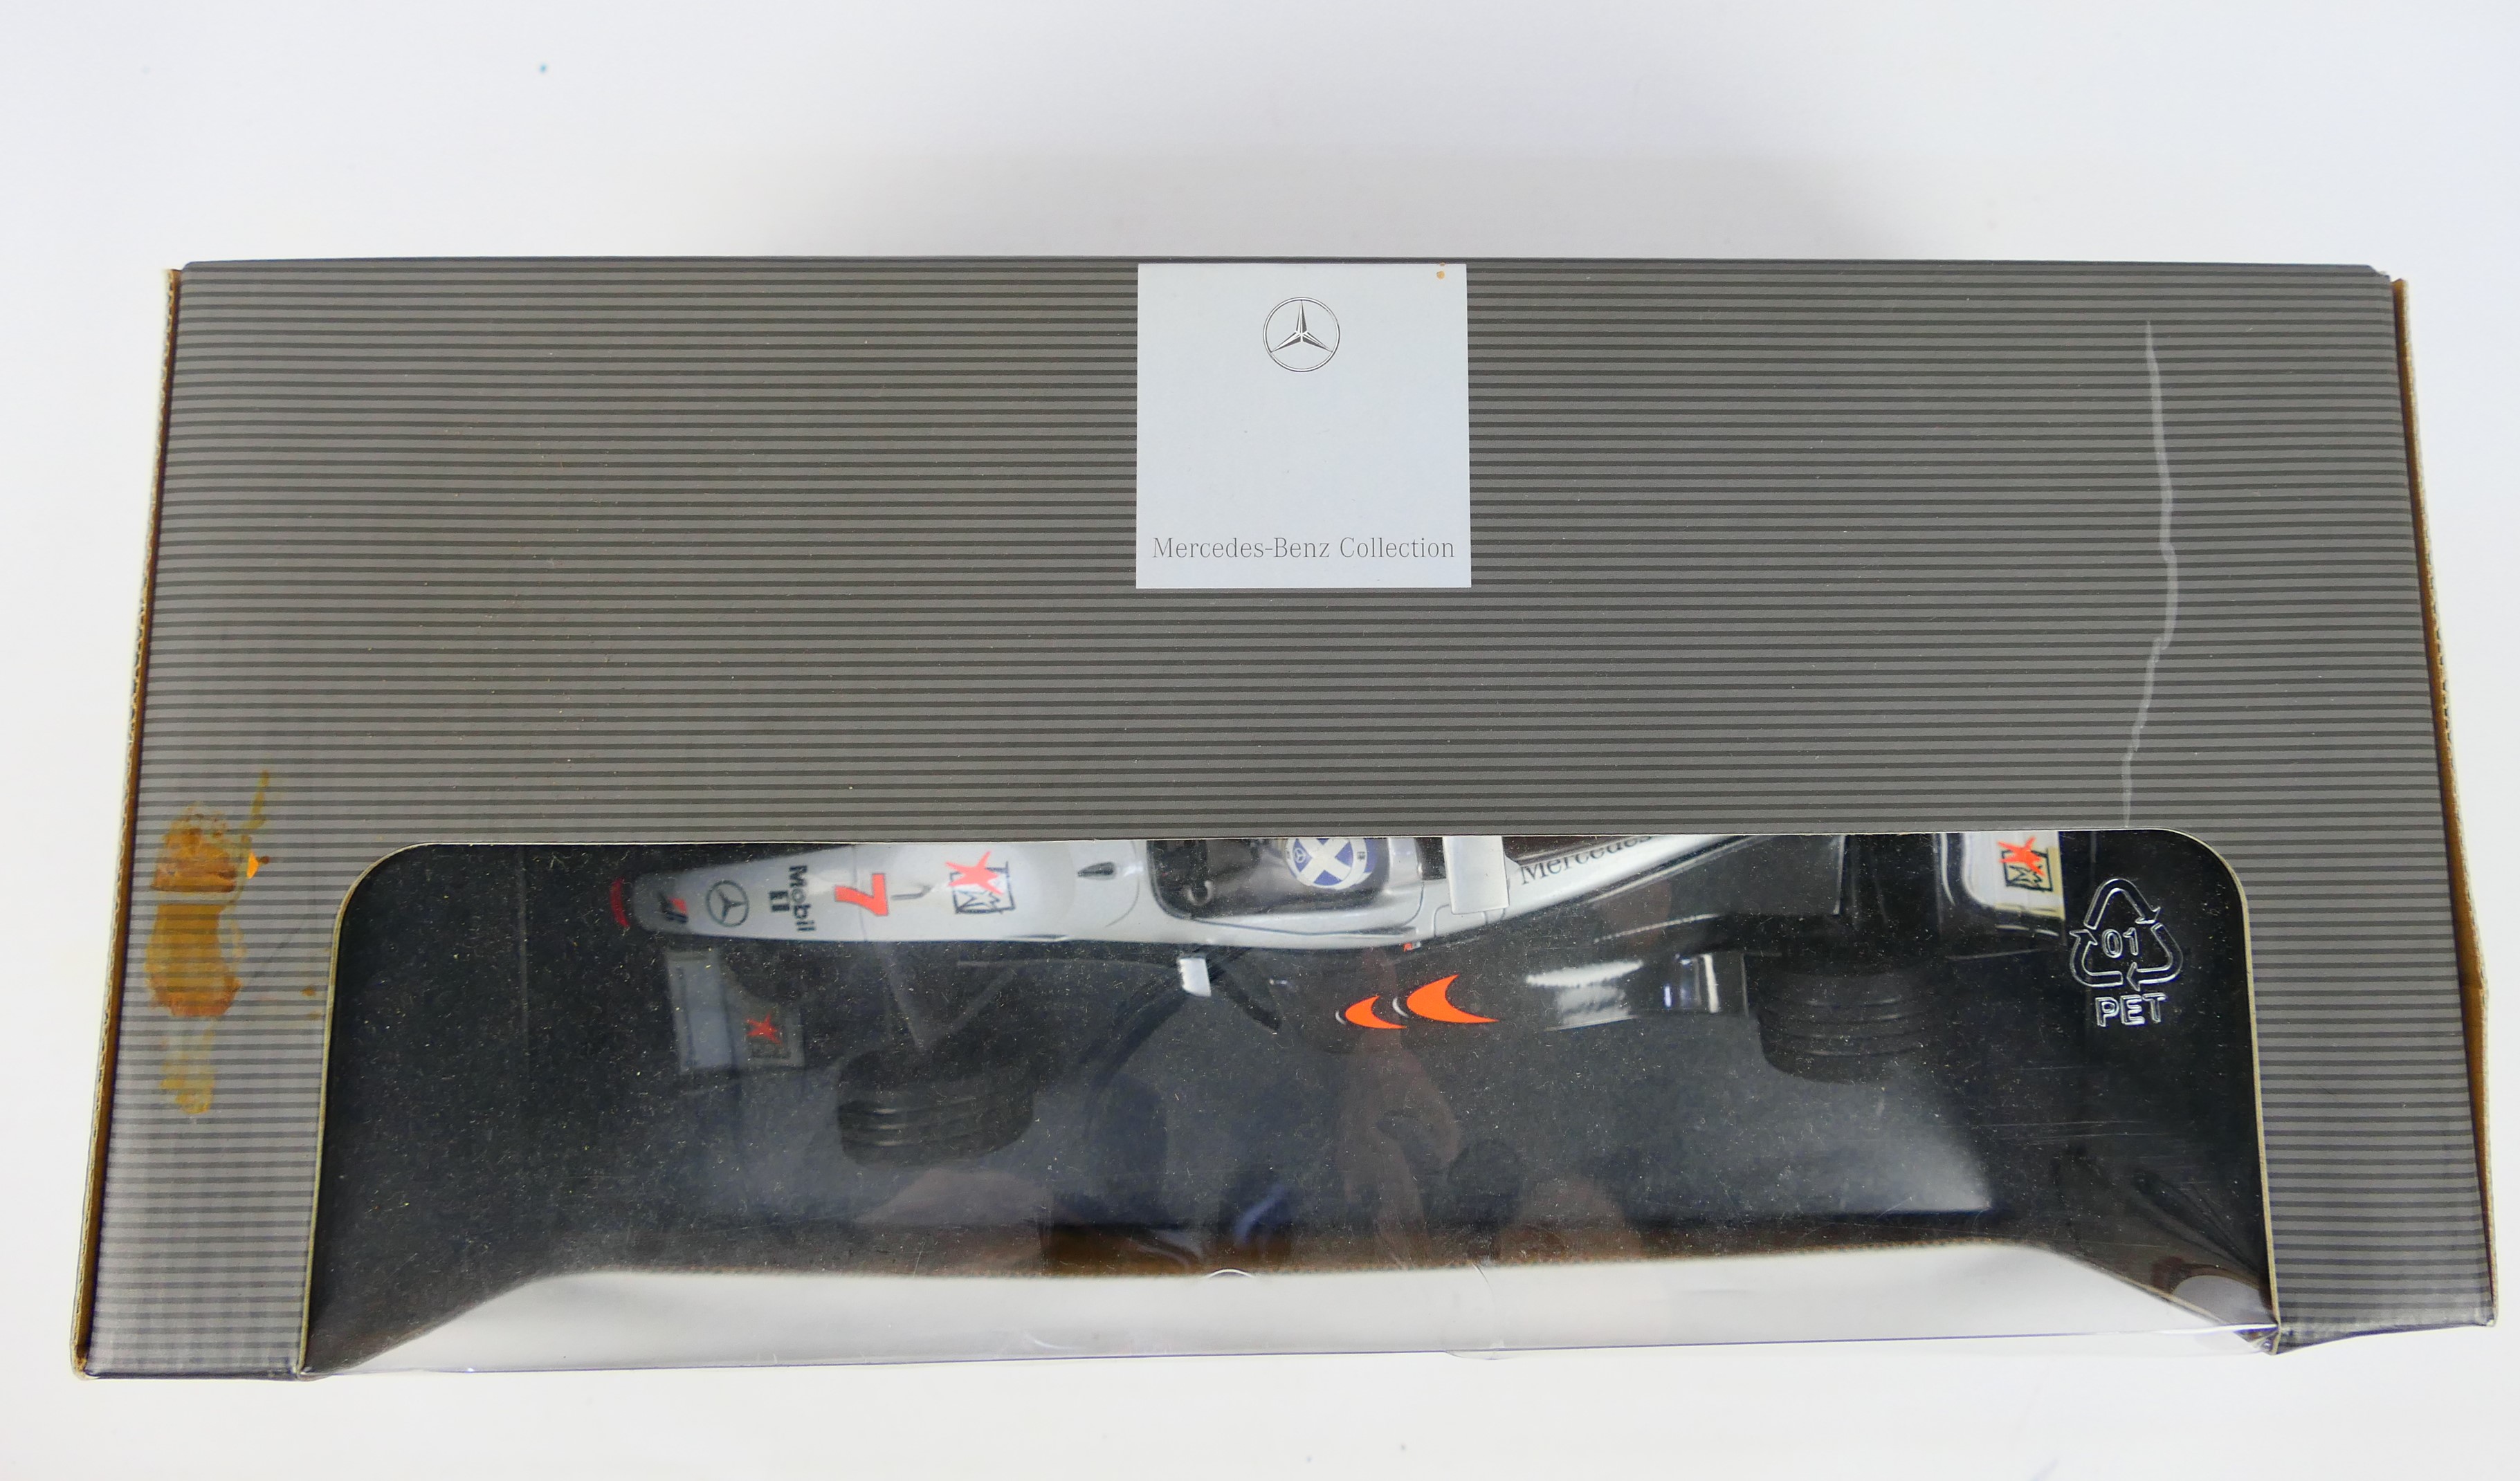 Minichamps - A boxed 1:18 scale Minichamps B6 6960220 diecast McLaren Mercedes F1 Racing Car, - Image 5 of 12